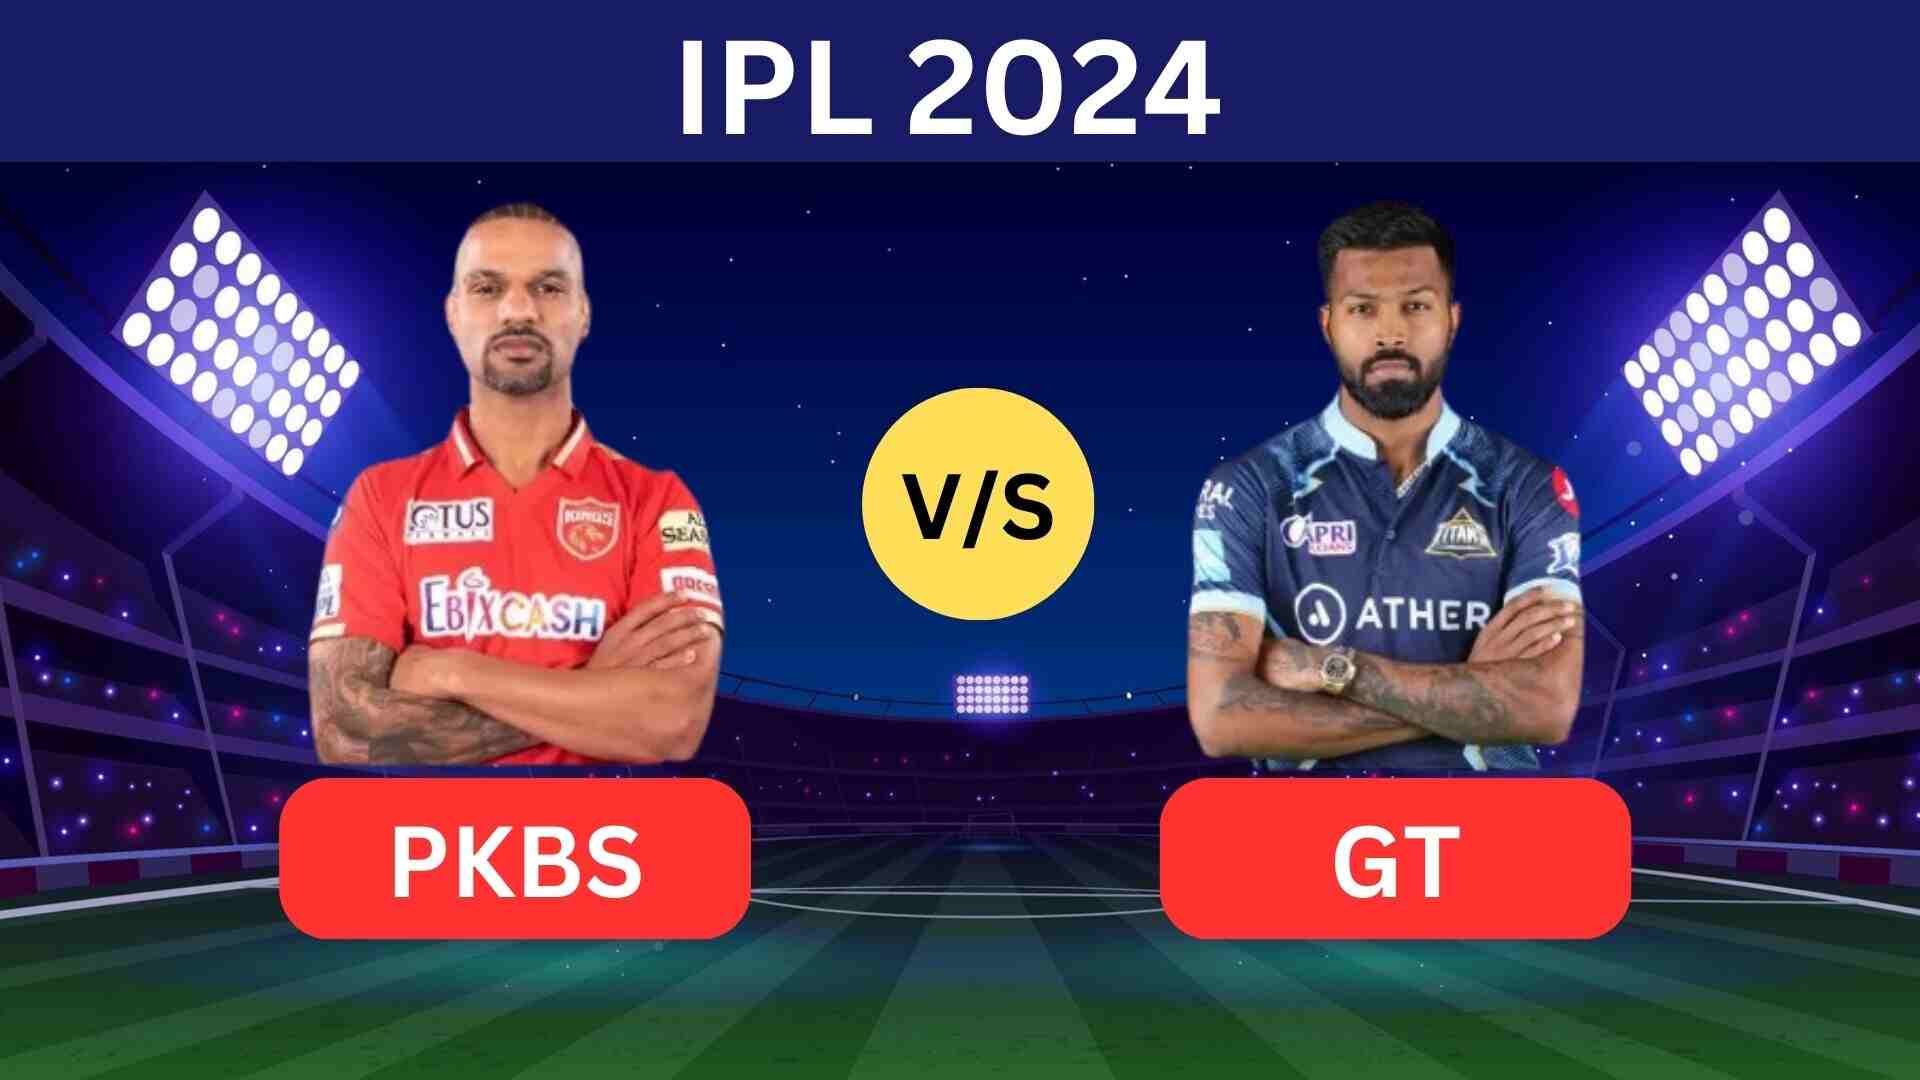 PBKS vs GT IPL 2024 Match